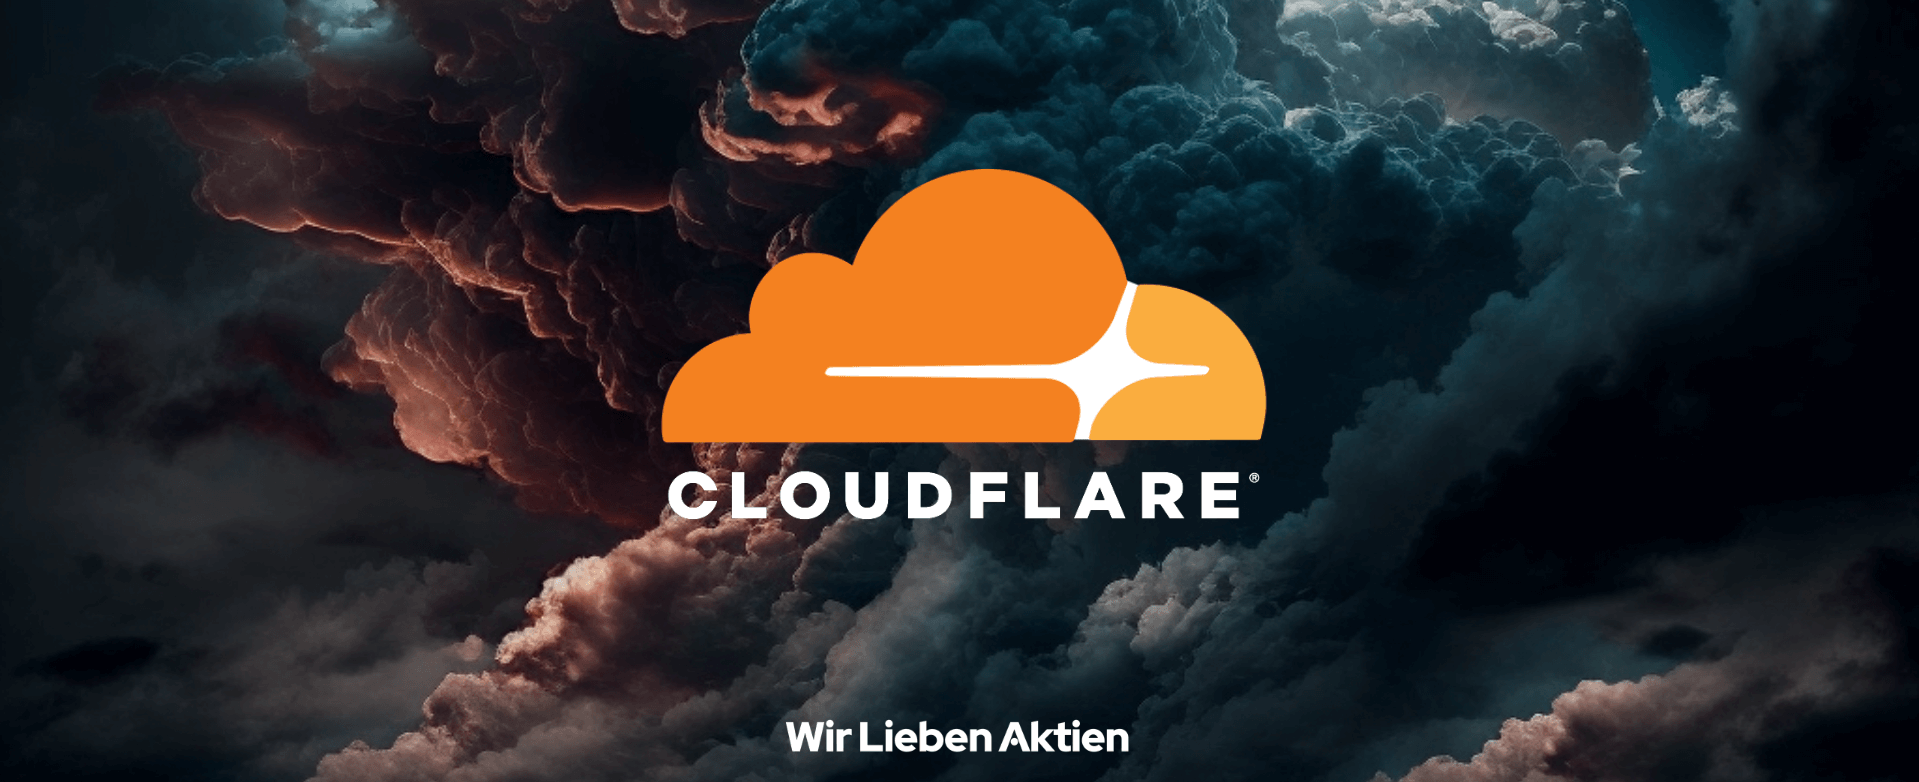 Cloudflare Aktie Analyse